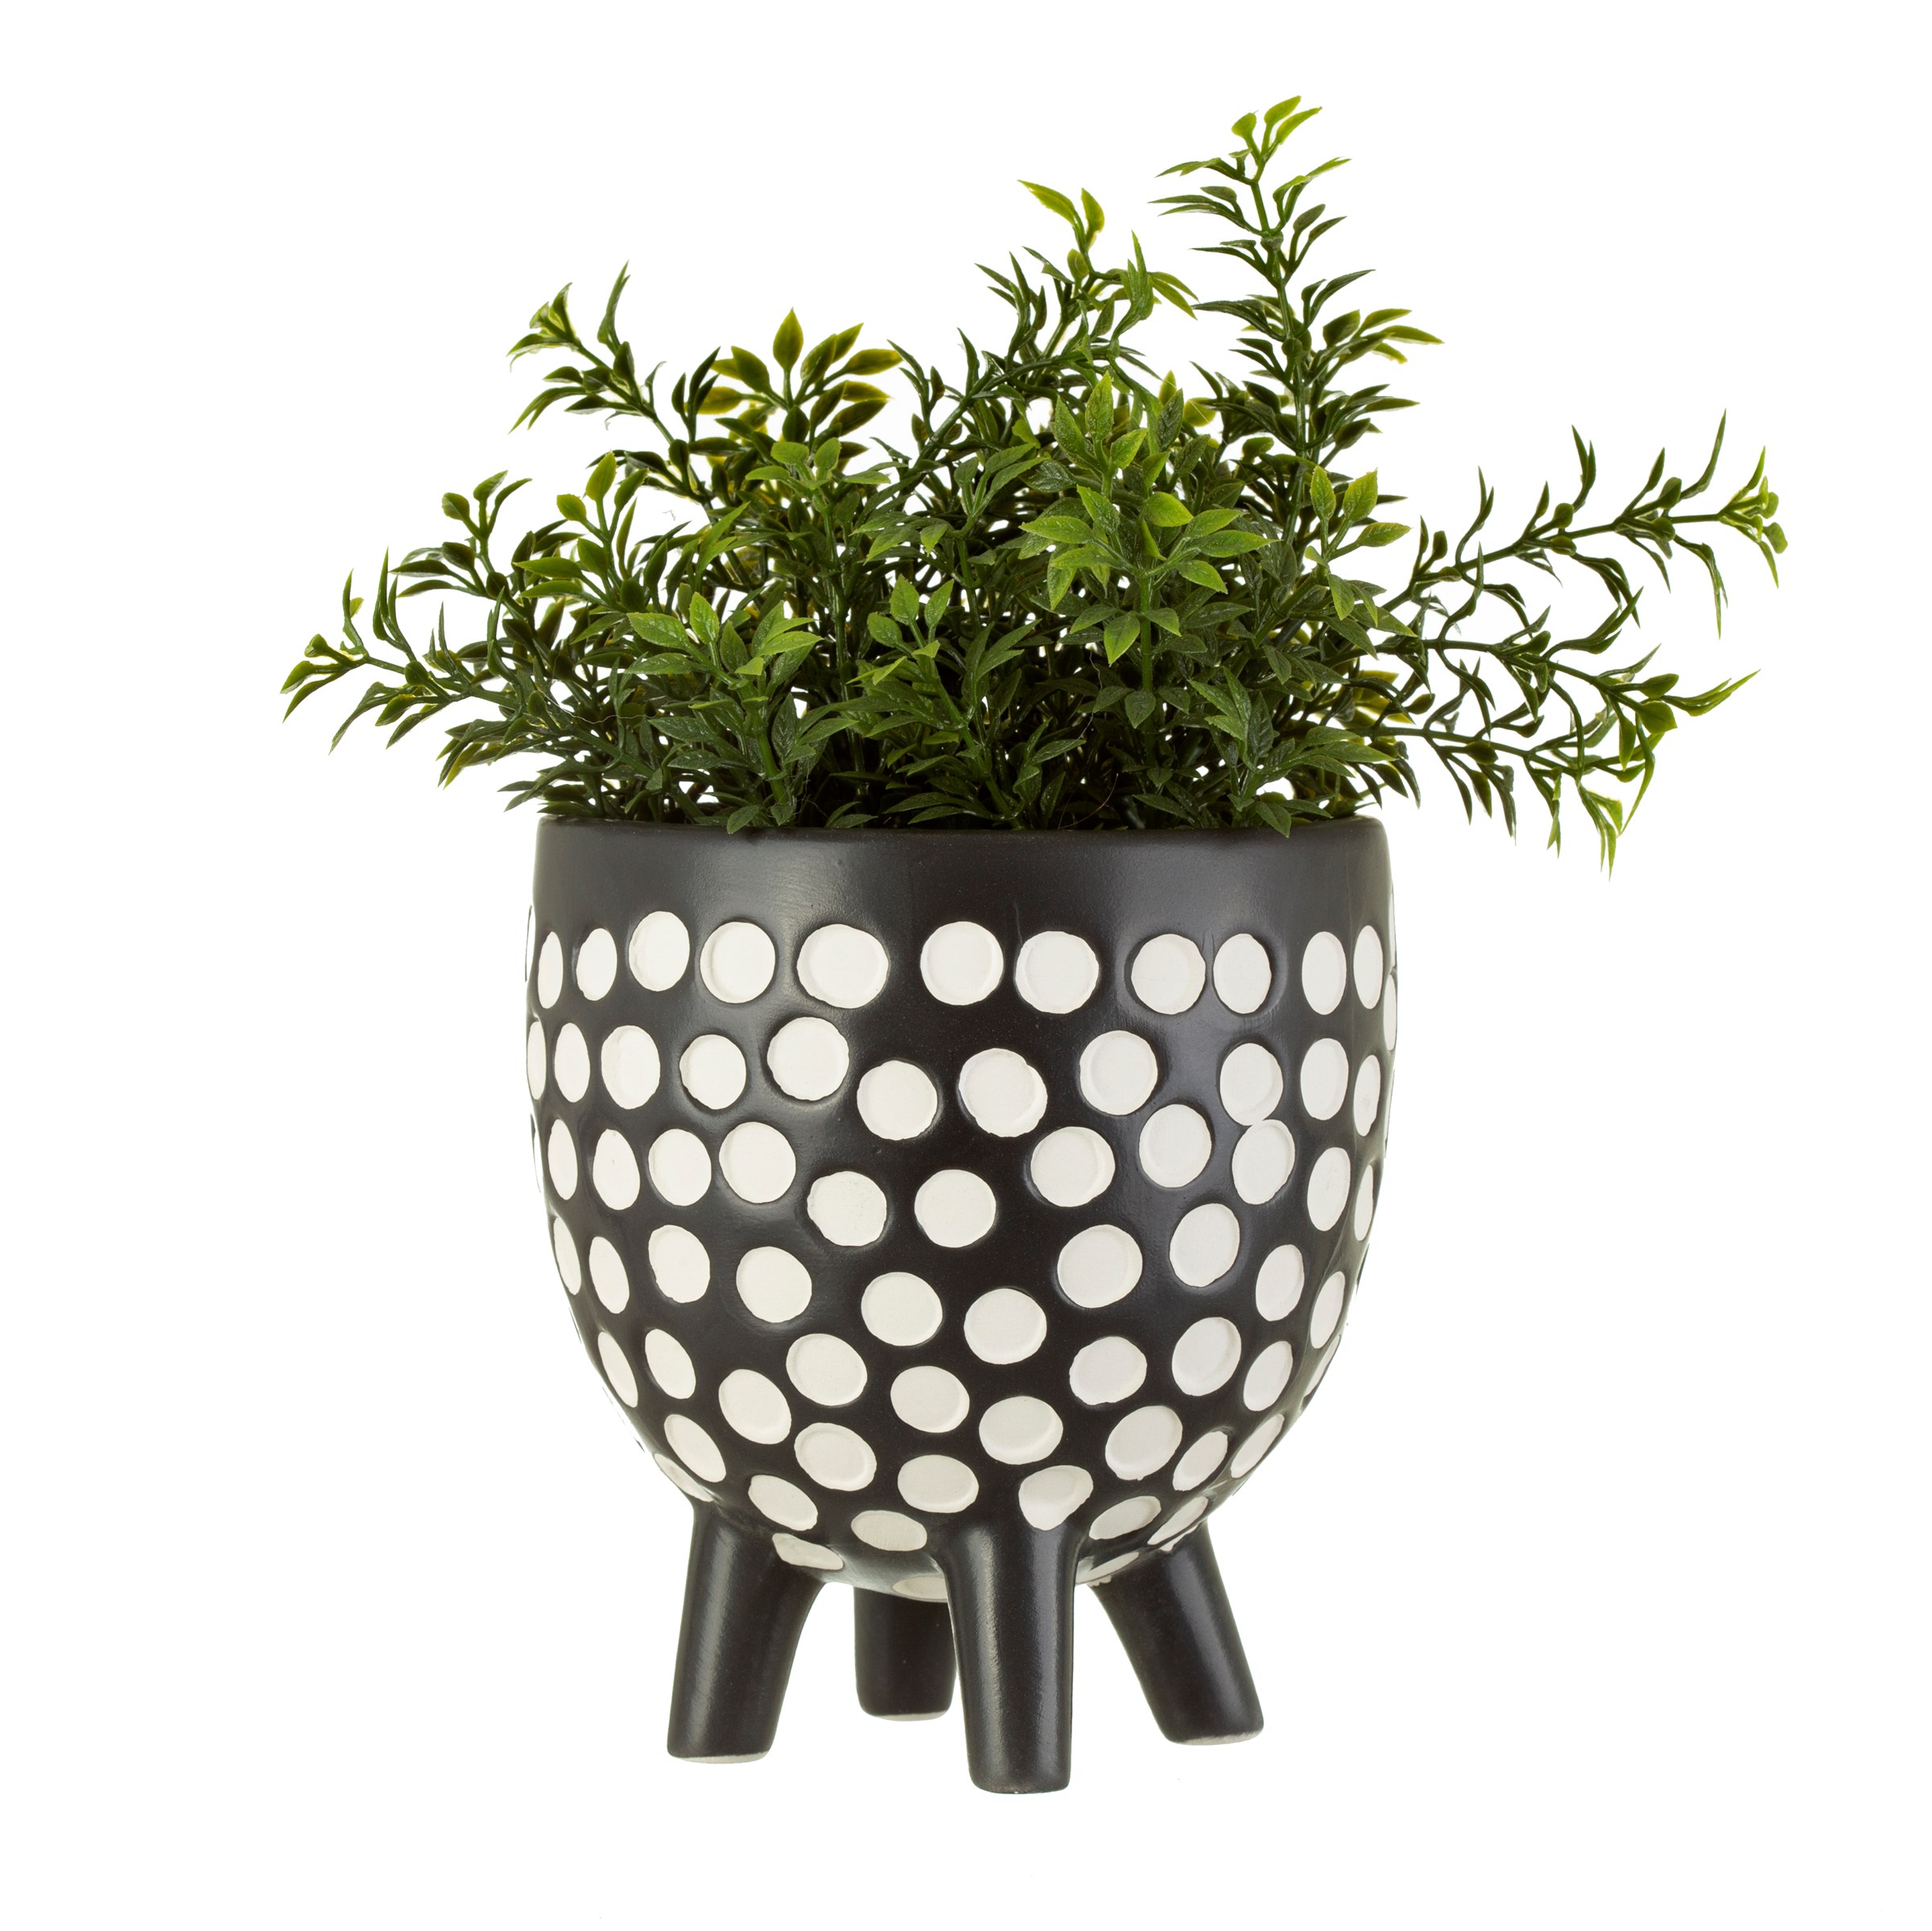 Monochrome Polka Dot Pot with Plant